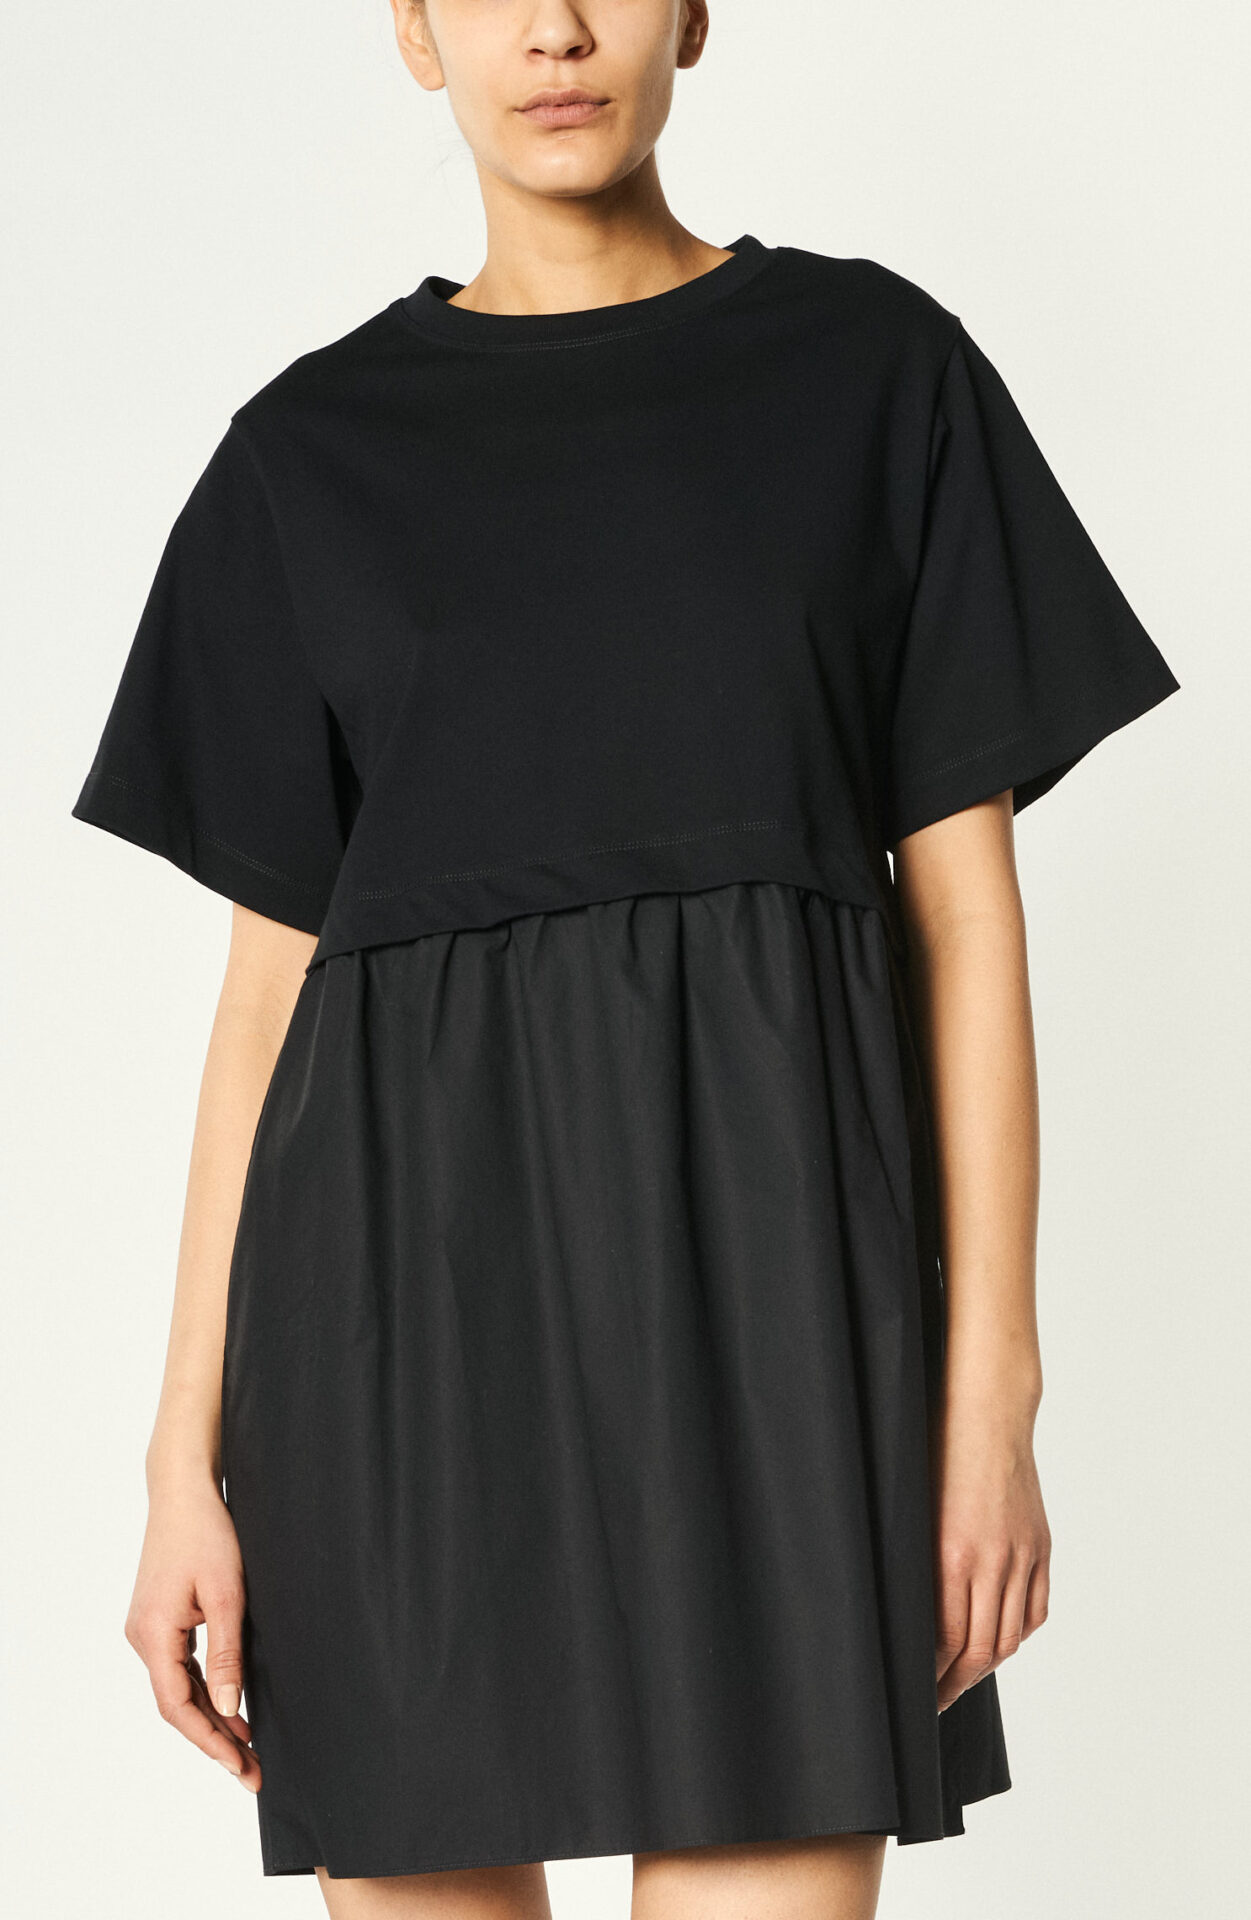 Oversize mini dress "Mix Poplin Jersey Dress" in black